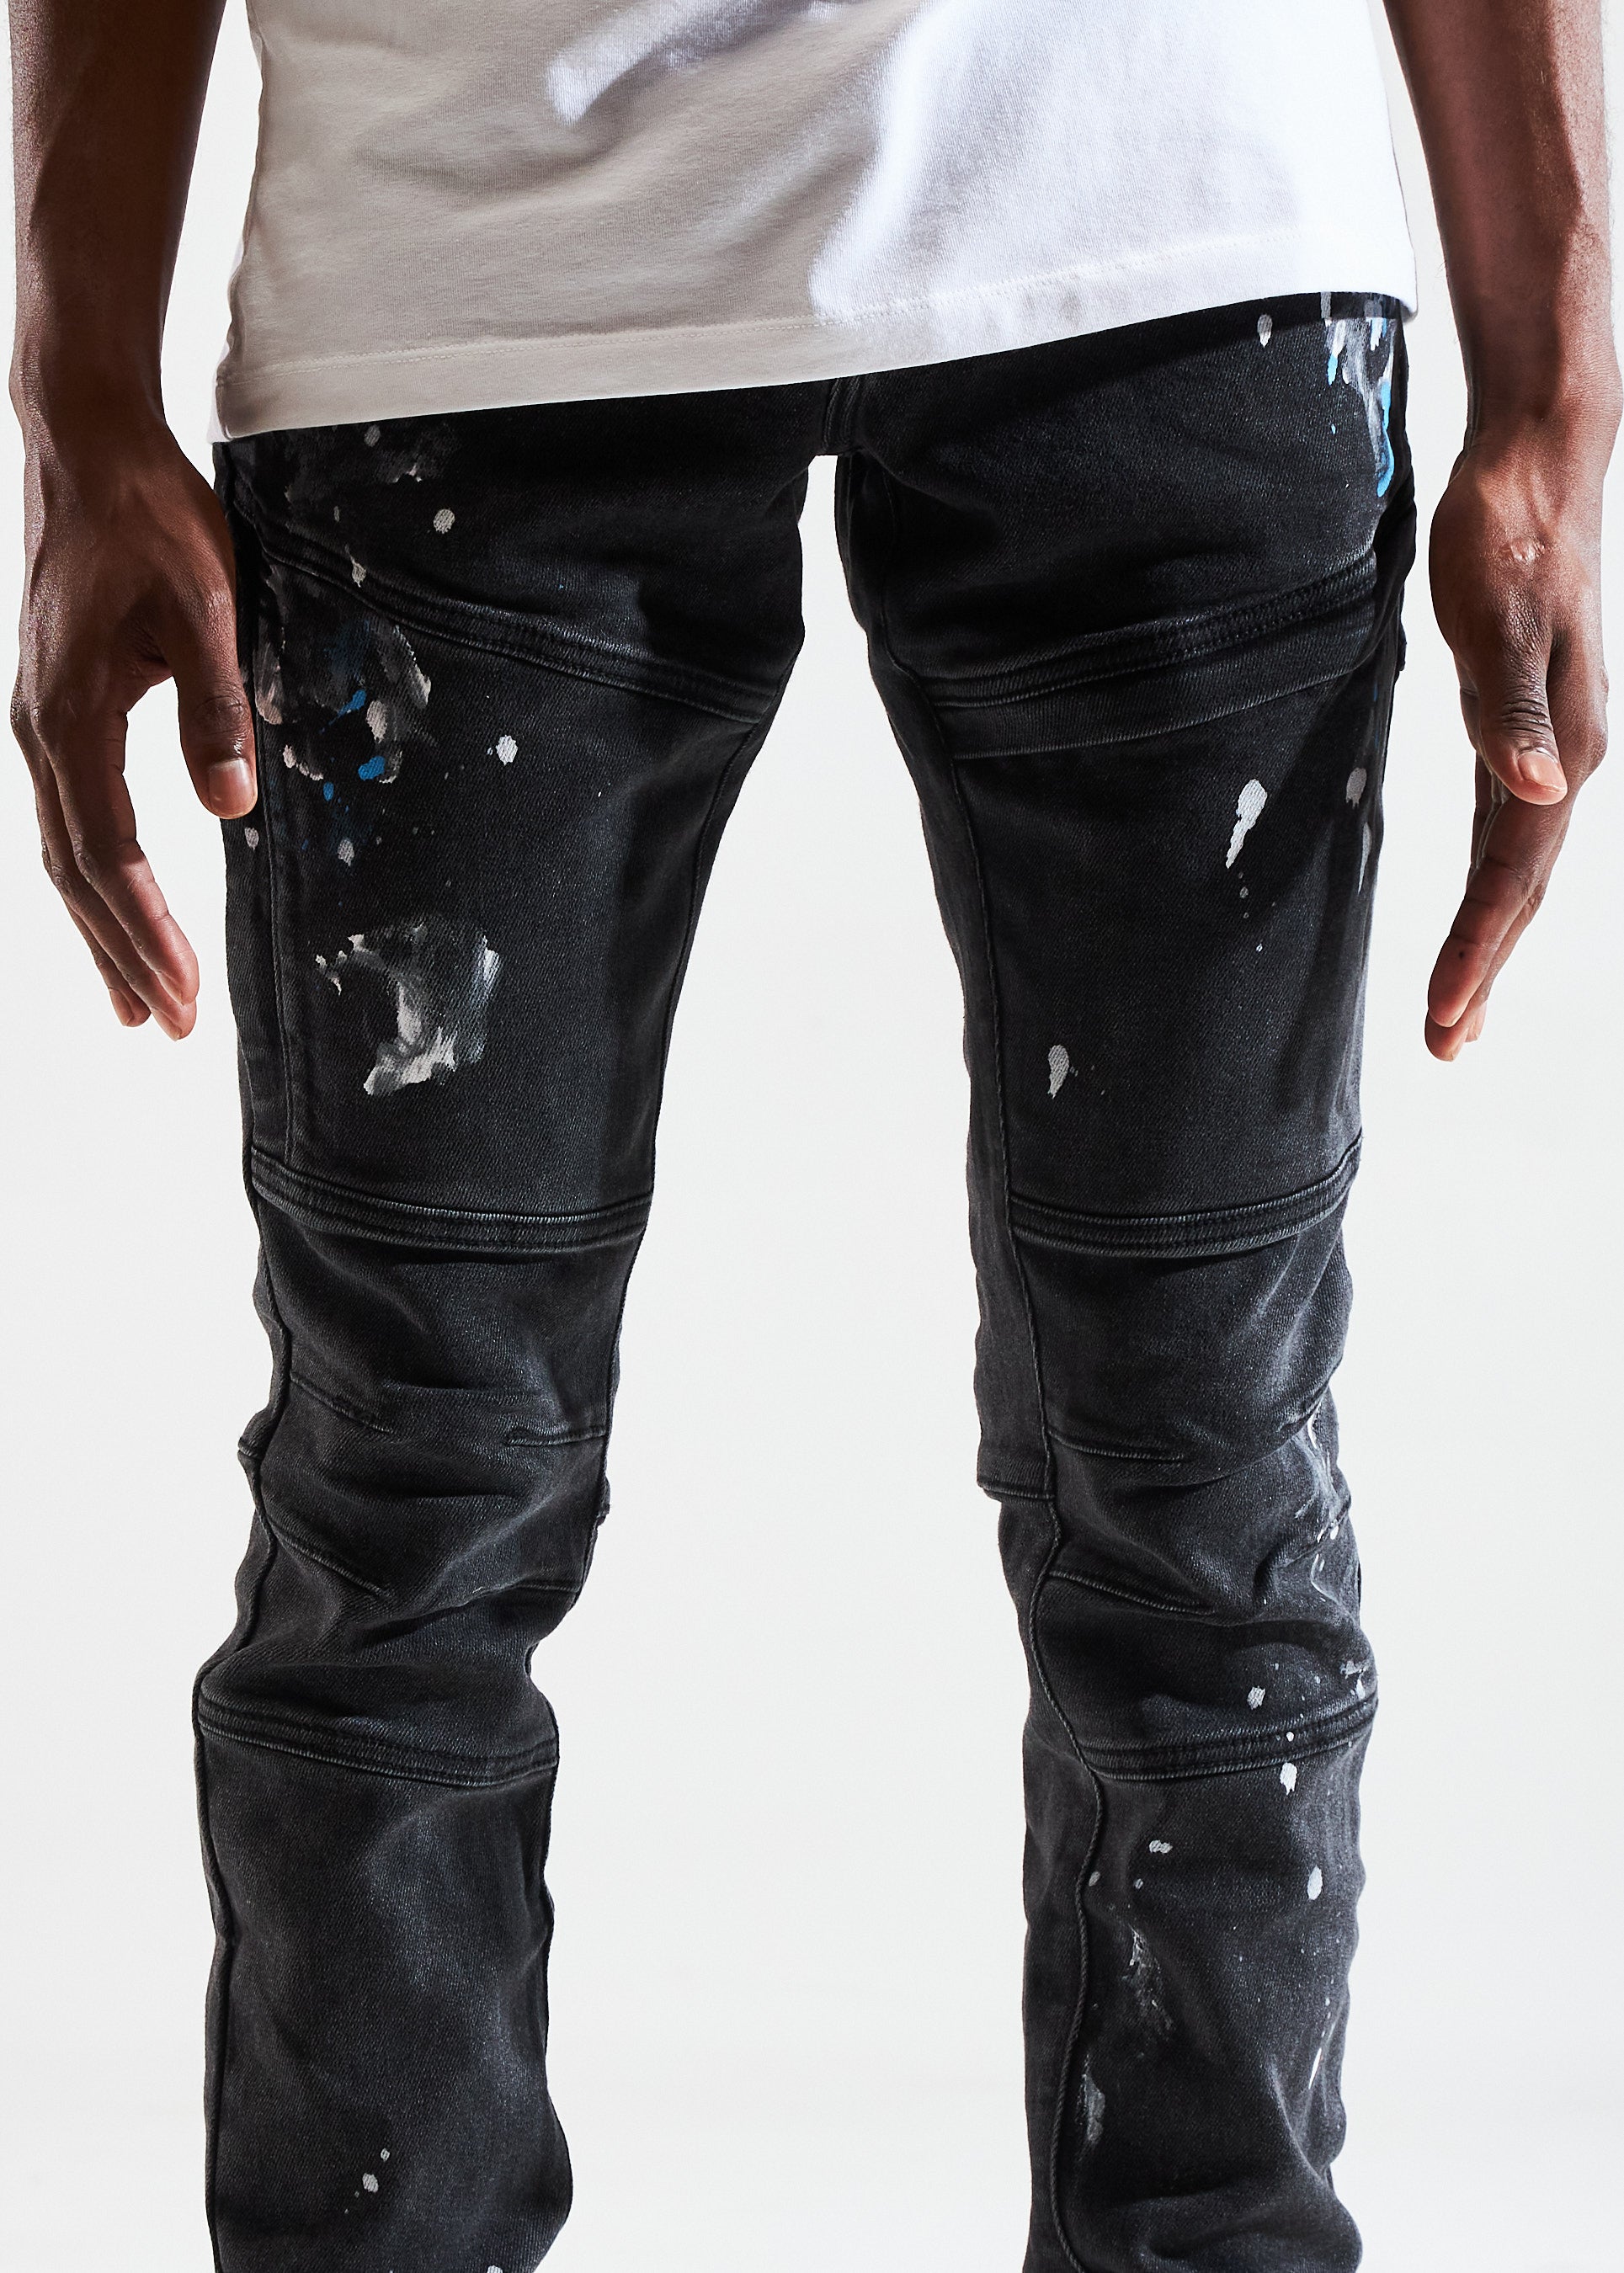 Crysp Denim Montana Black Dip Dye Denim Jeans, 53% OFF